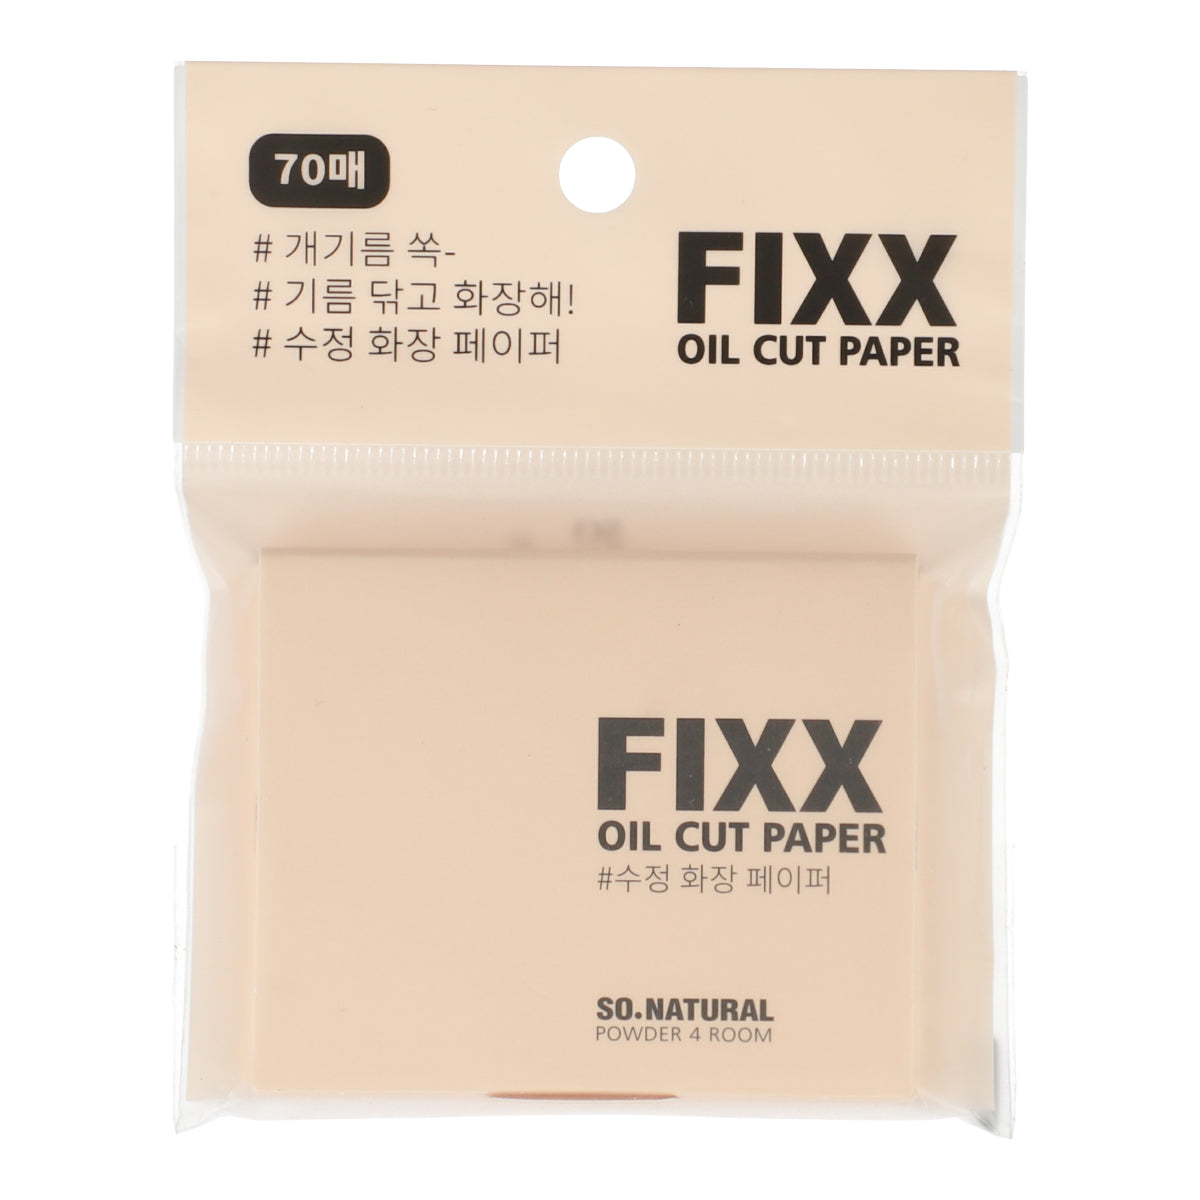 Fixx Oil Cut Paper / Papel absorbente de aceite